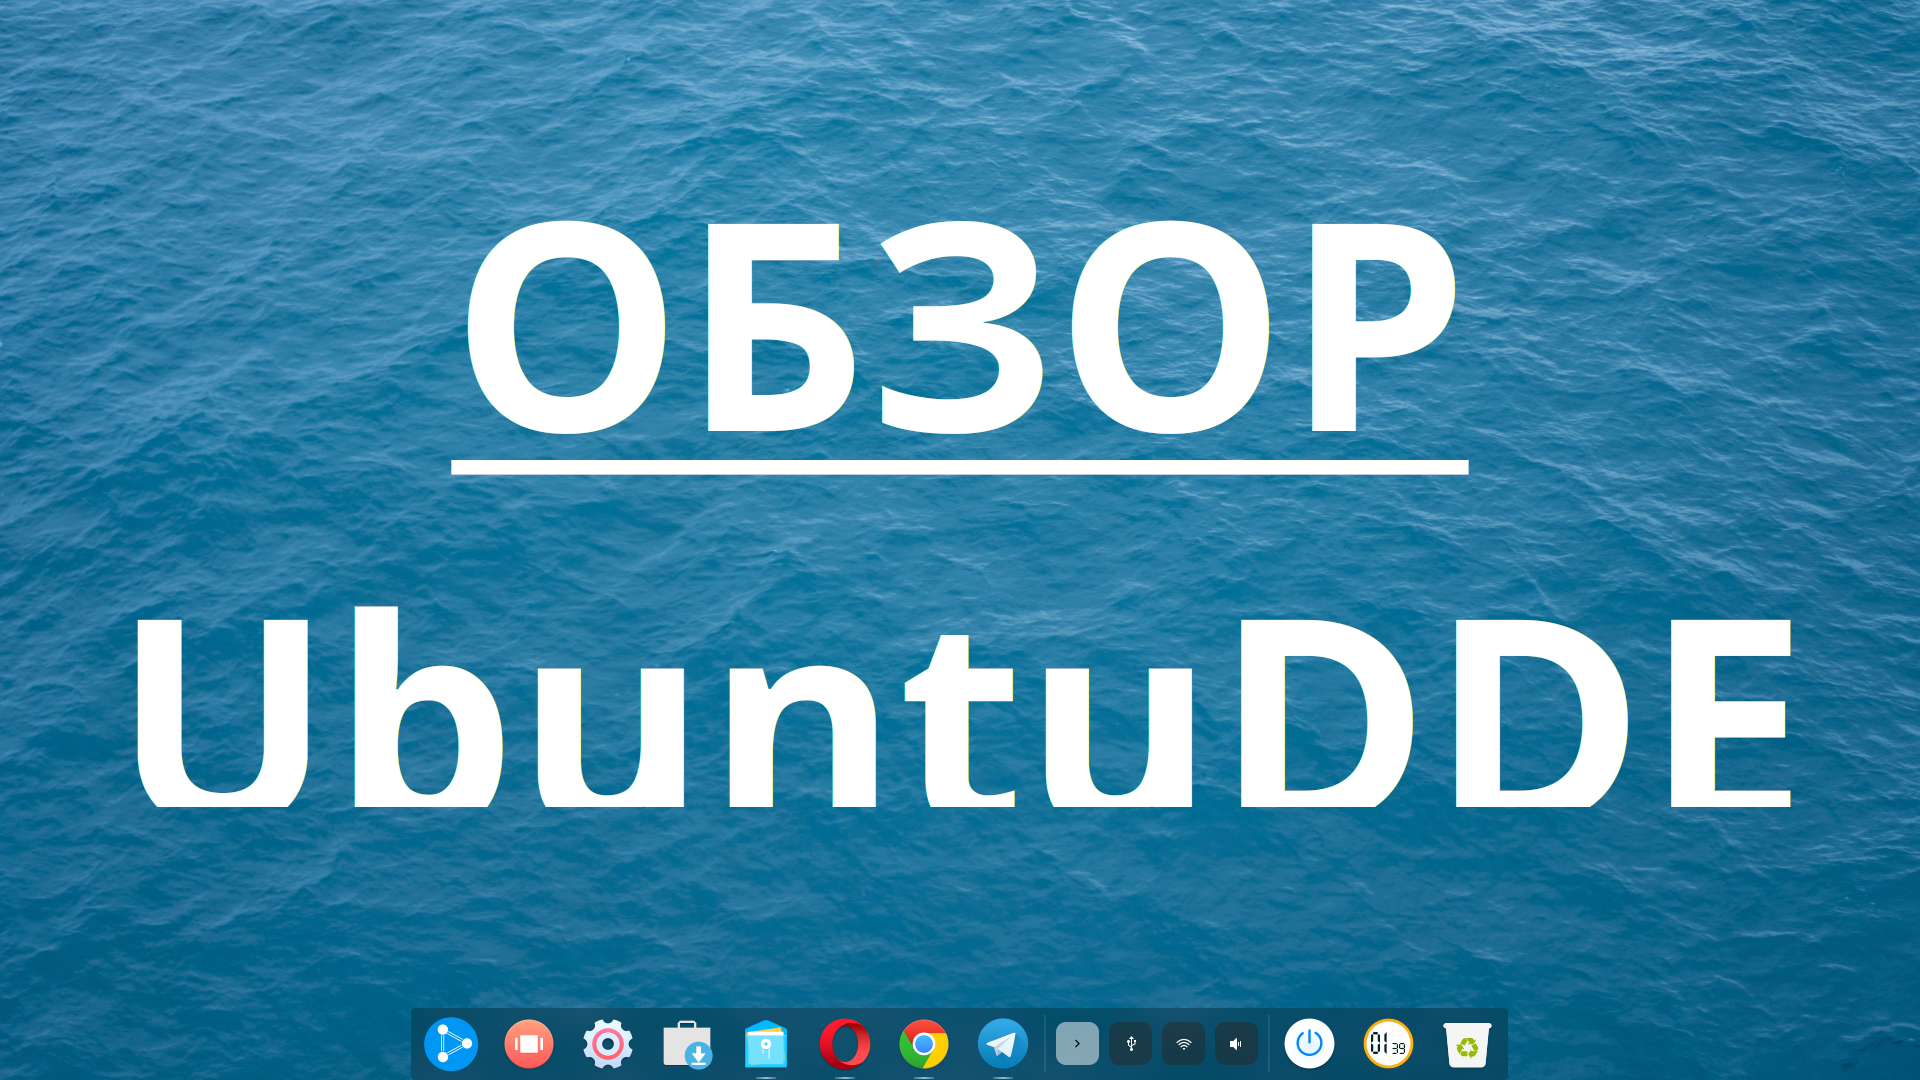 Обзор UbuntuDDE